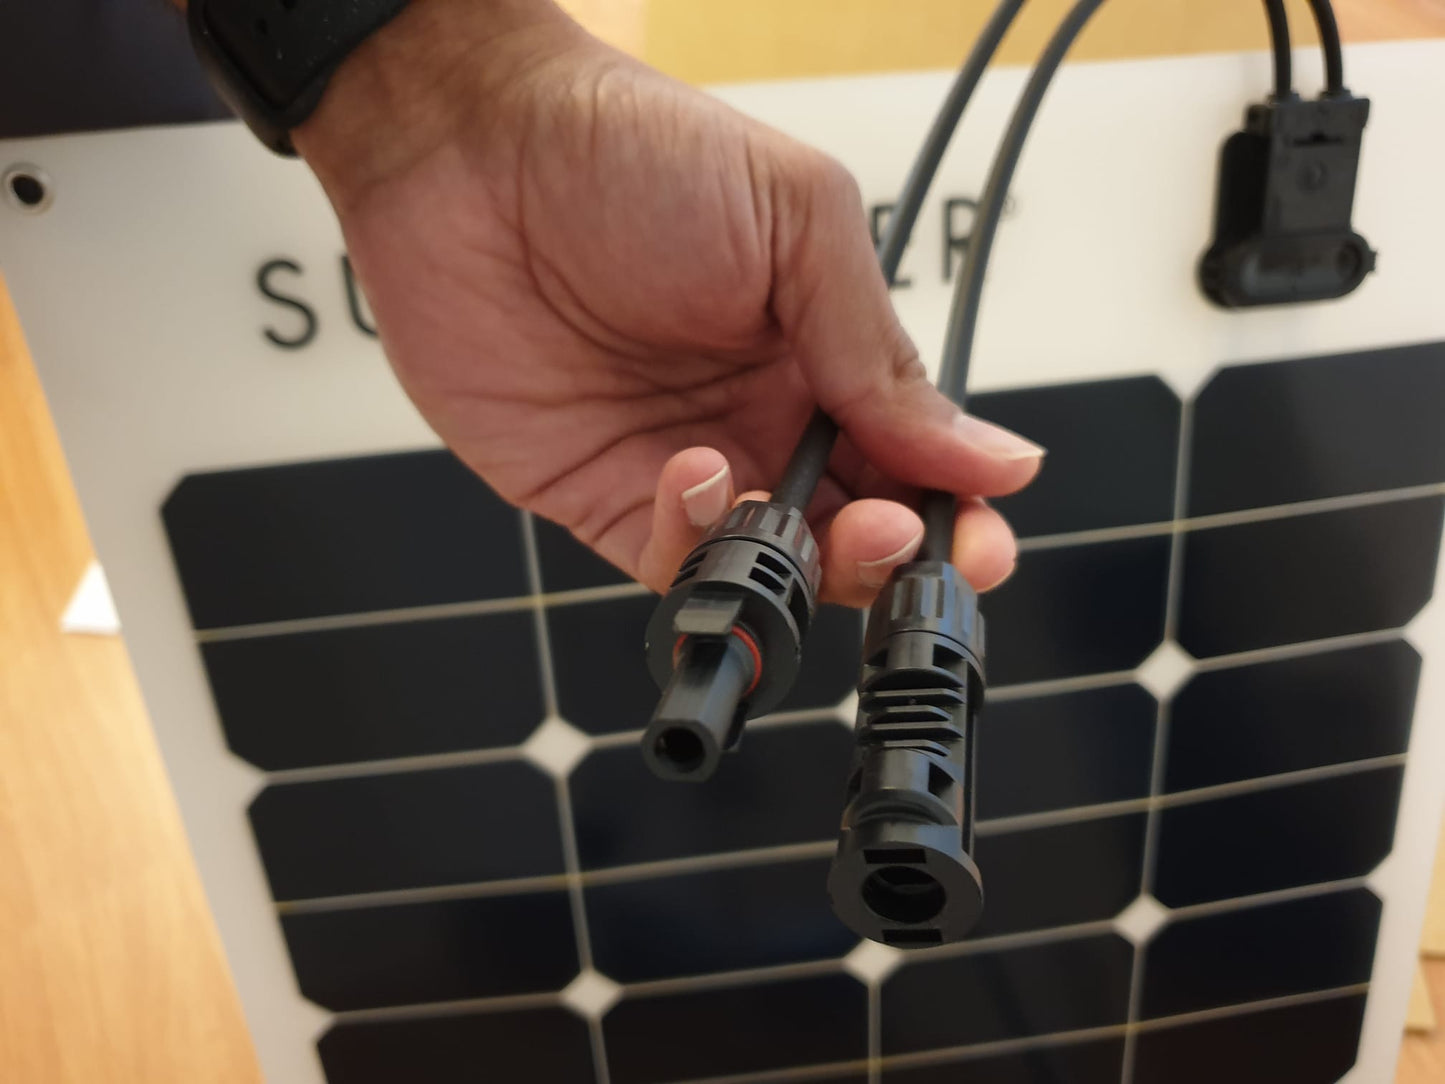 SunPower® Flexible Solar Panels 50W | SPR-E-Flex-50